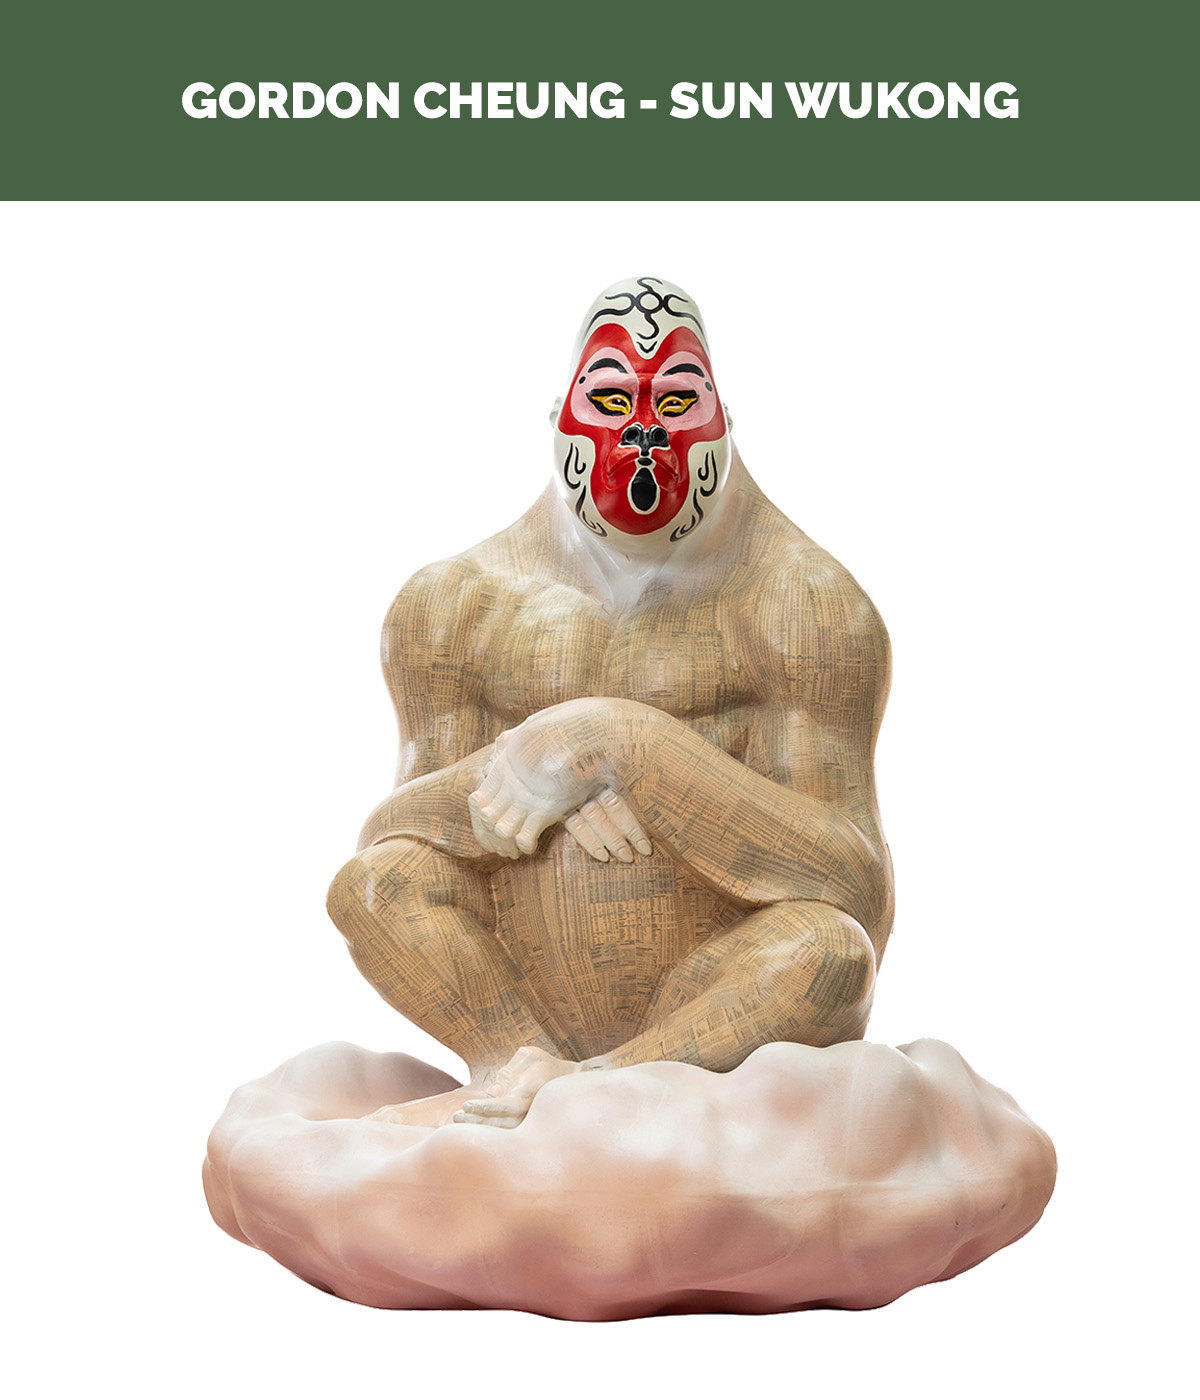 Gordon Cheung - Sun Wukong